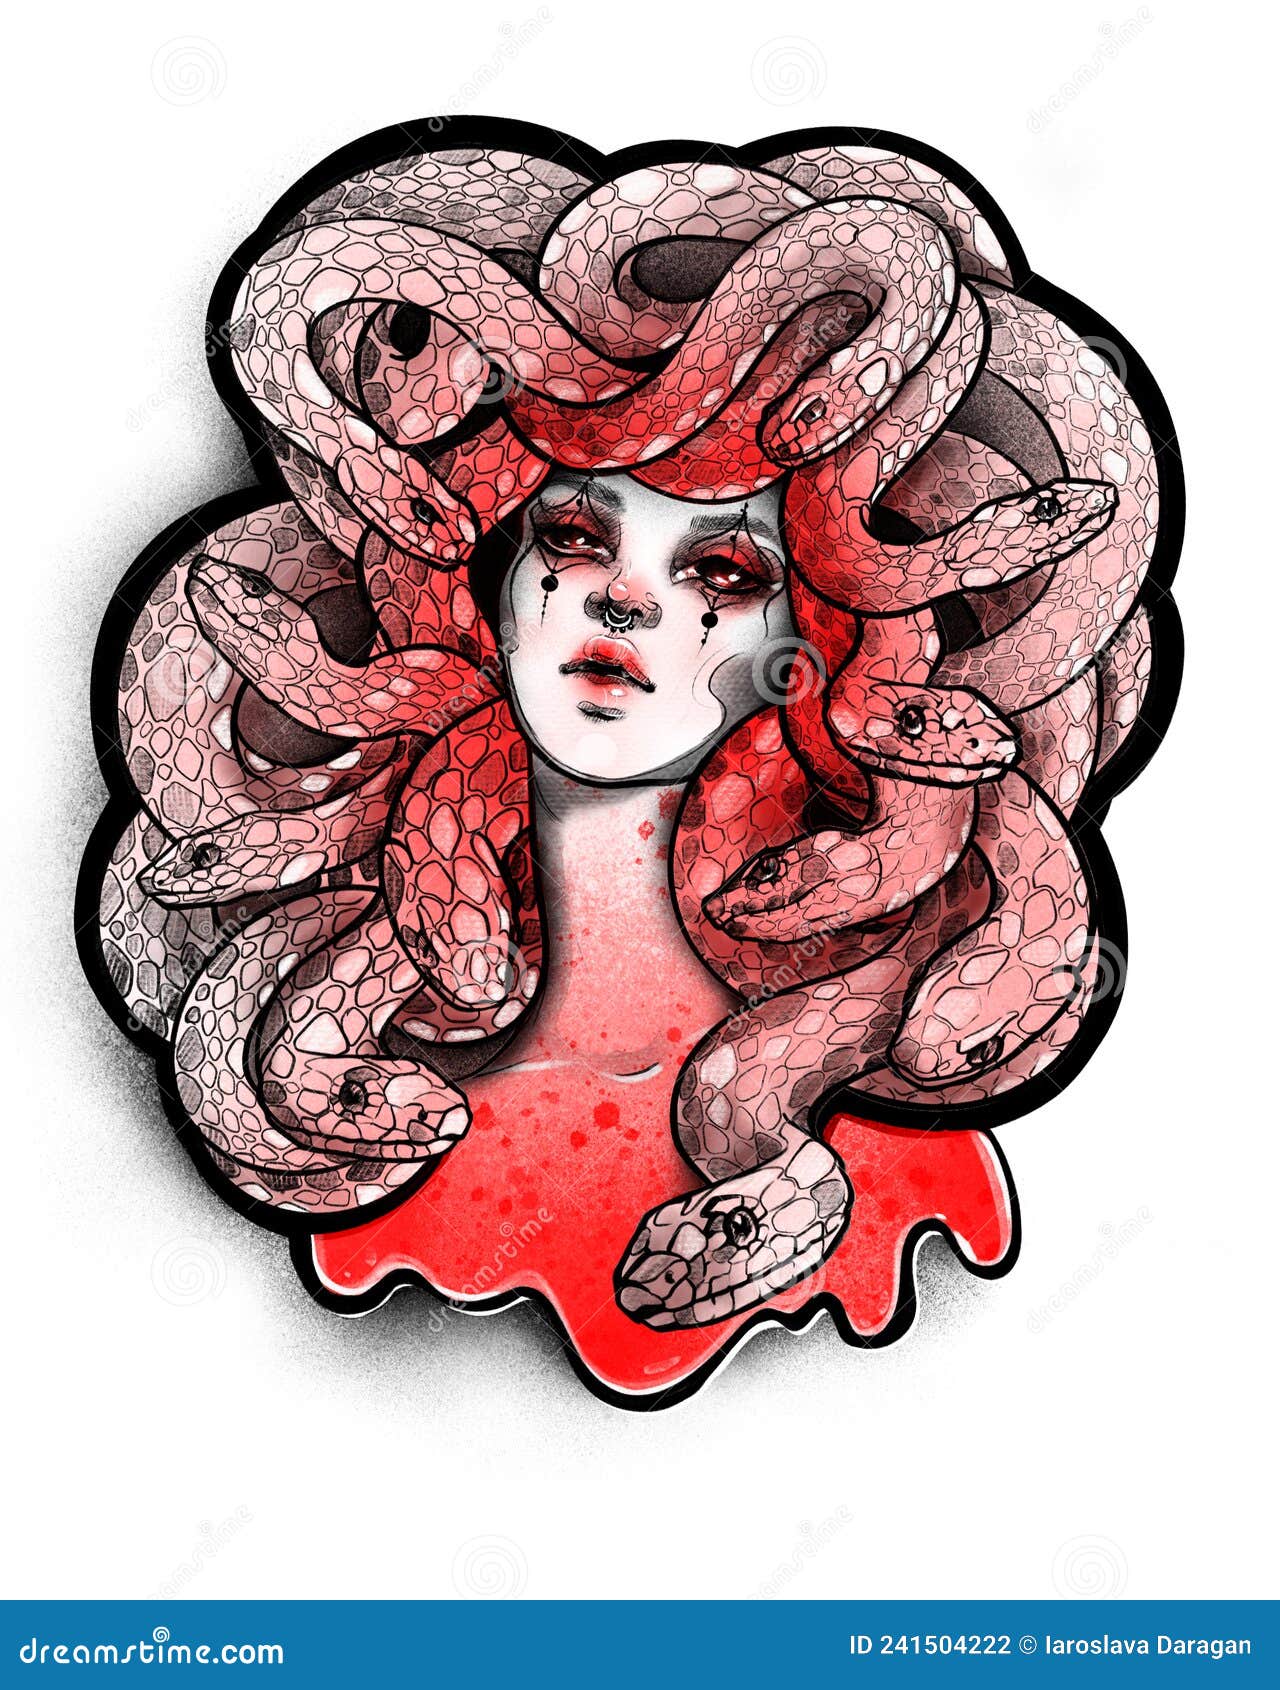 Medusa Tattoo | Medusa tattoo design, Body art tattoos, Medusa tattoo